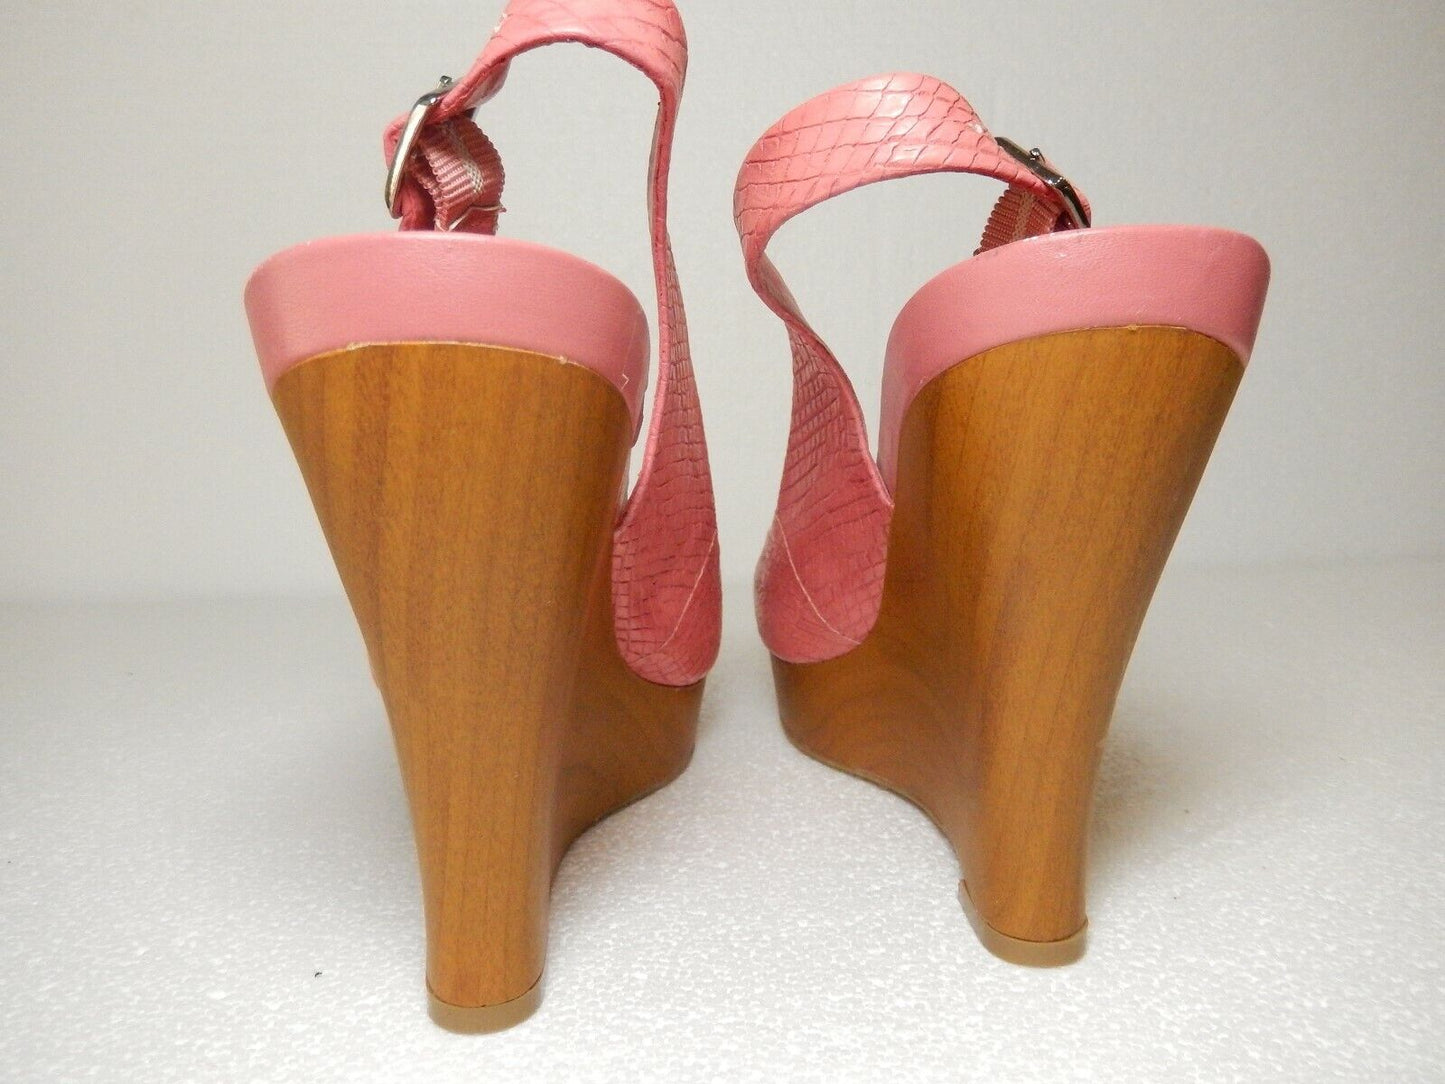 Jessica Simpson Genette Platform Pink Snakeskin Cork Sling Wedge Sandals Sz 7M